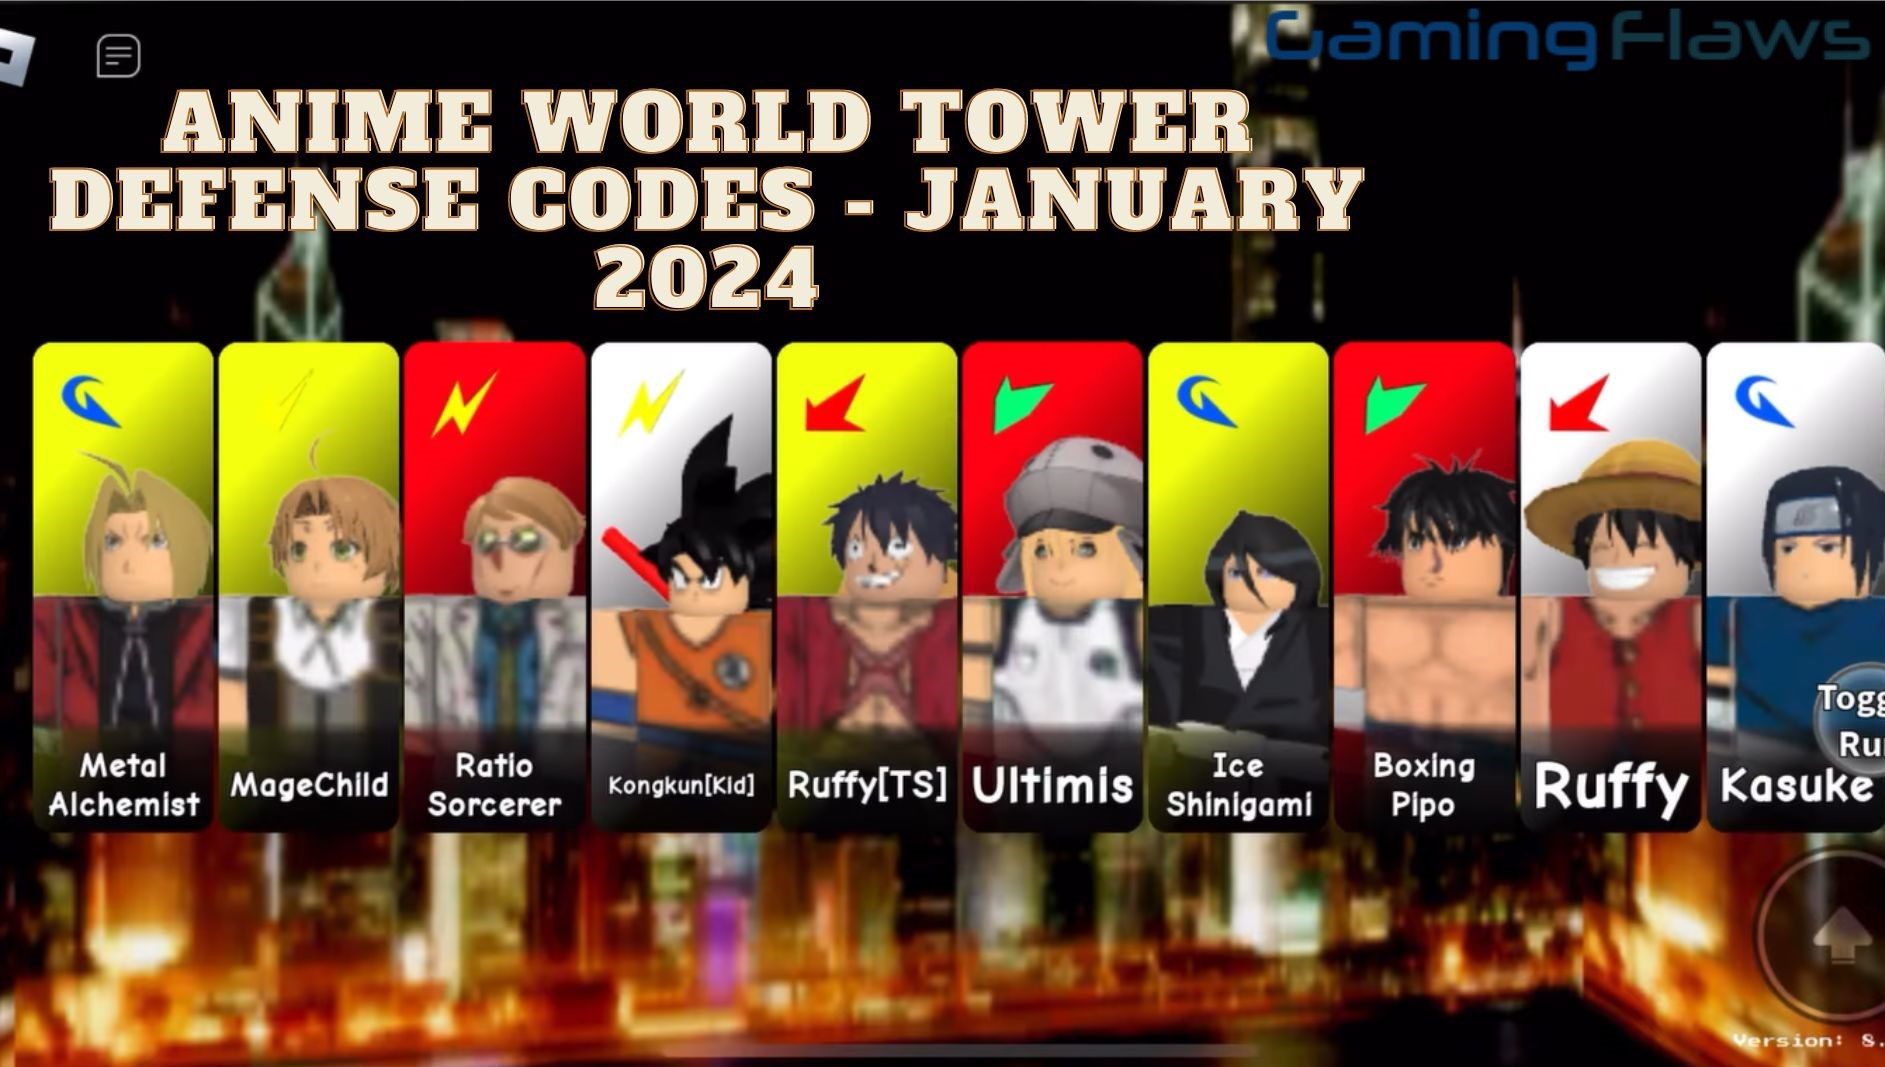 Anime World Tower Defense Codes - January 2024